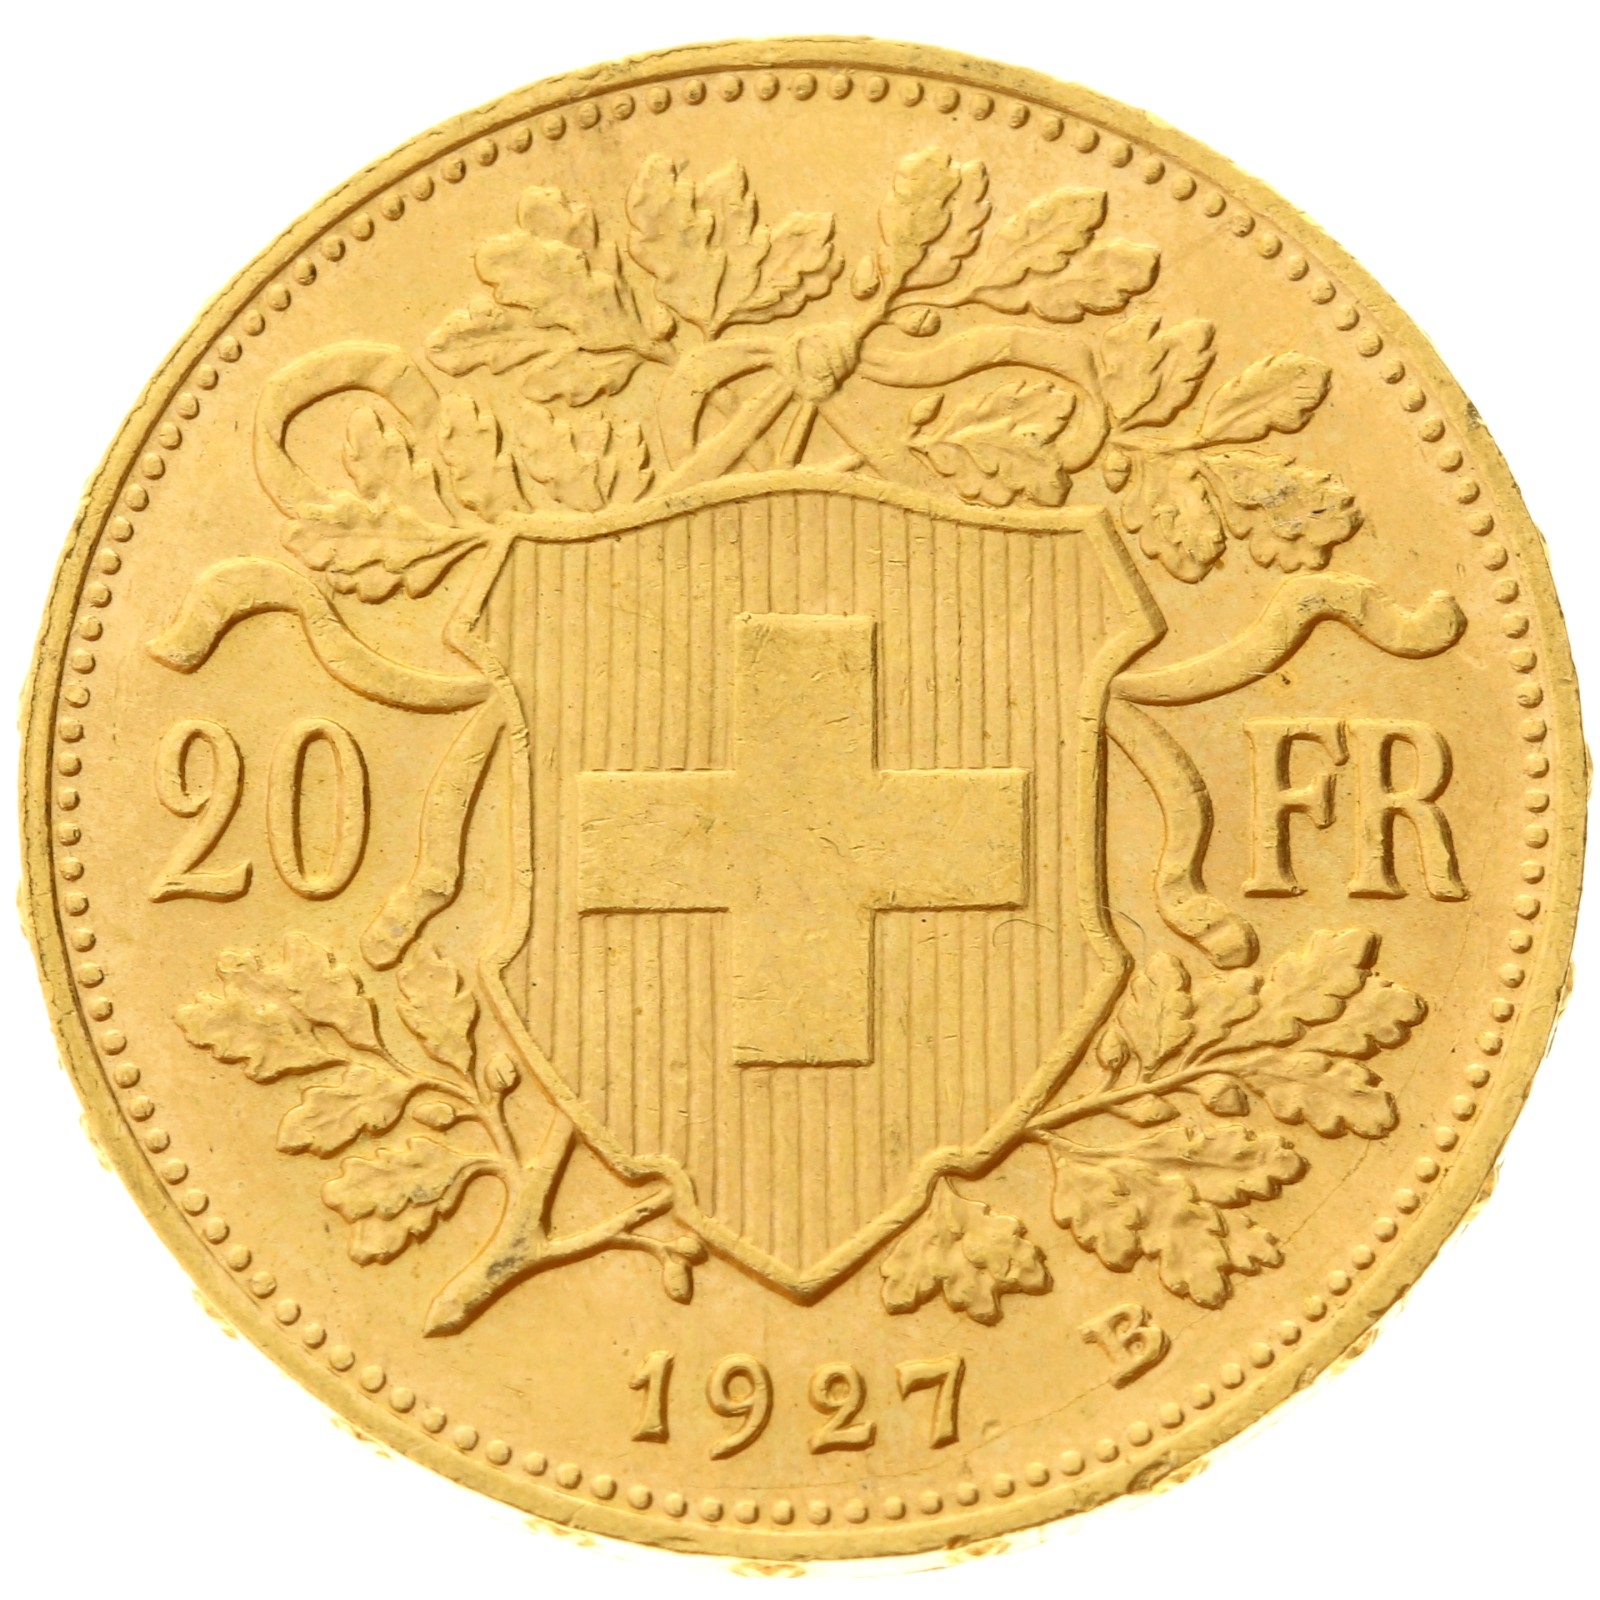 Switzerland - 20 francs - 1927 